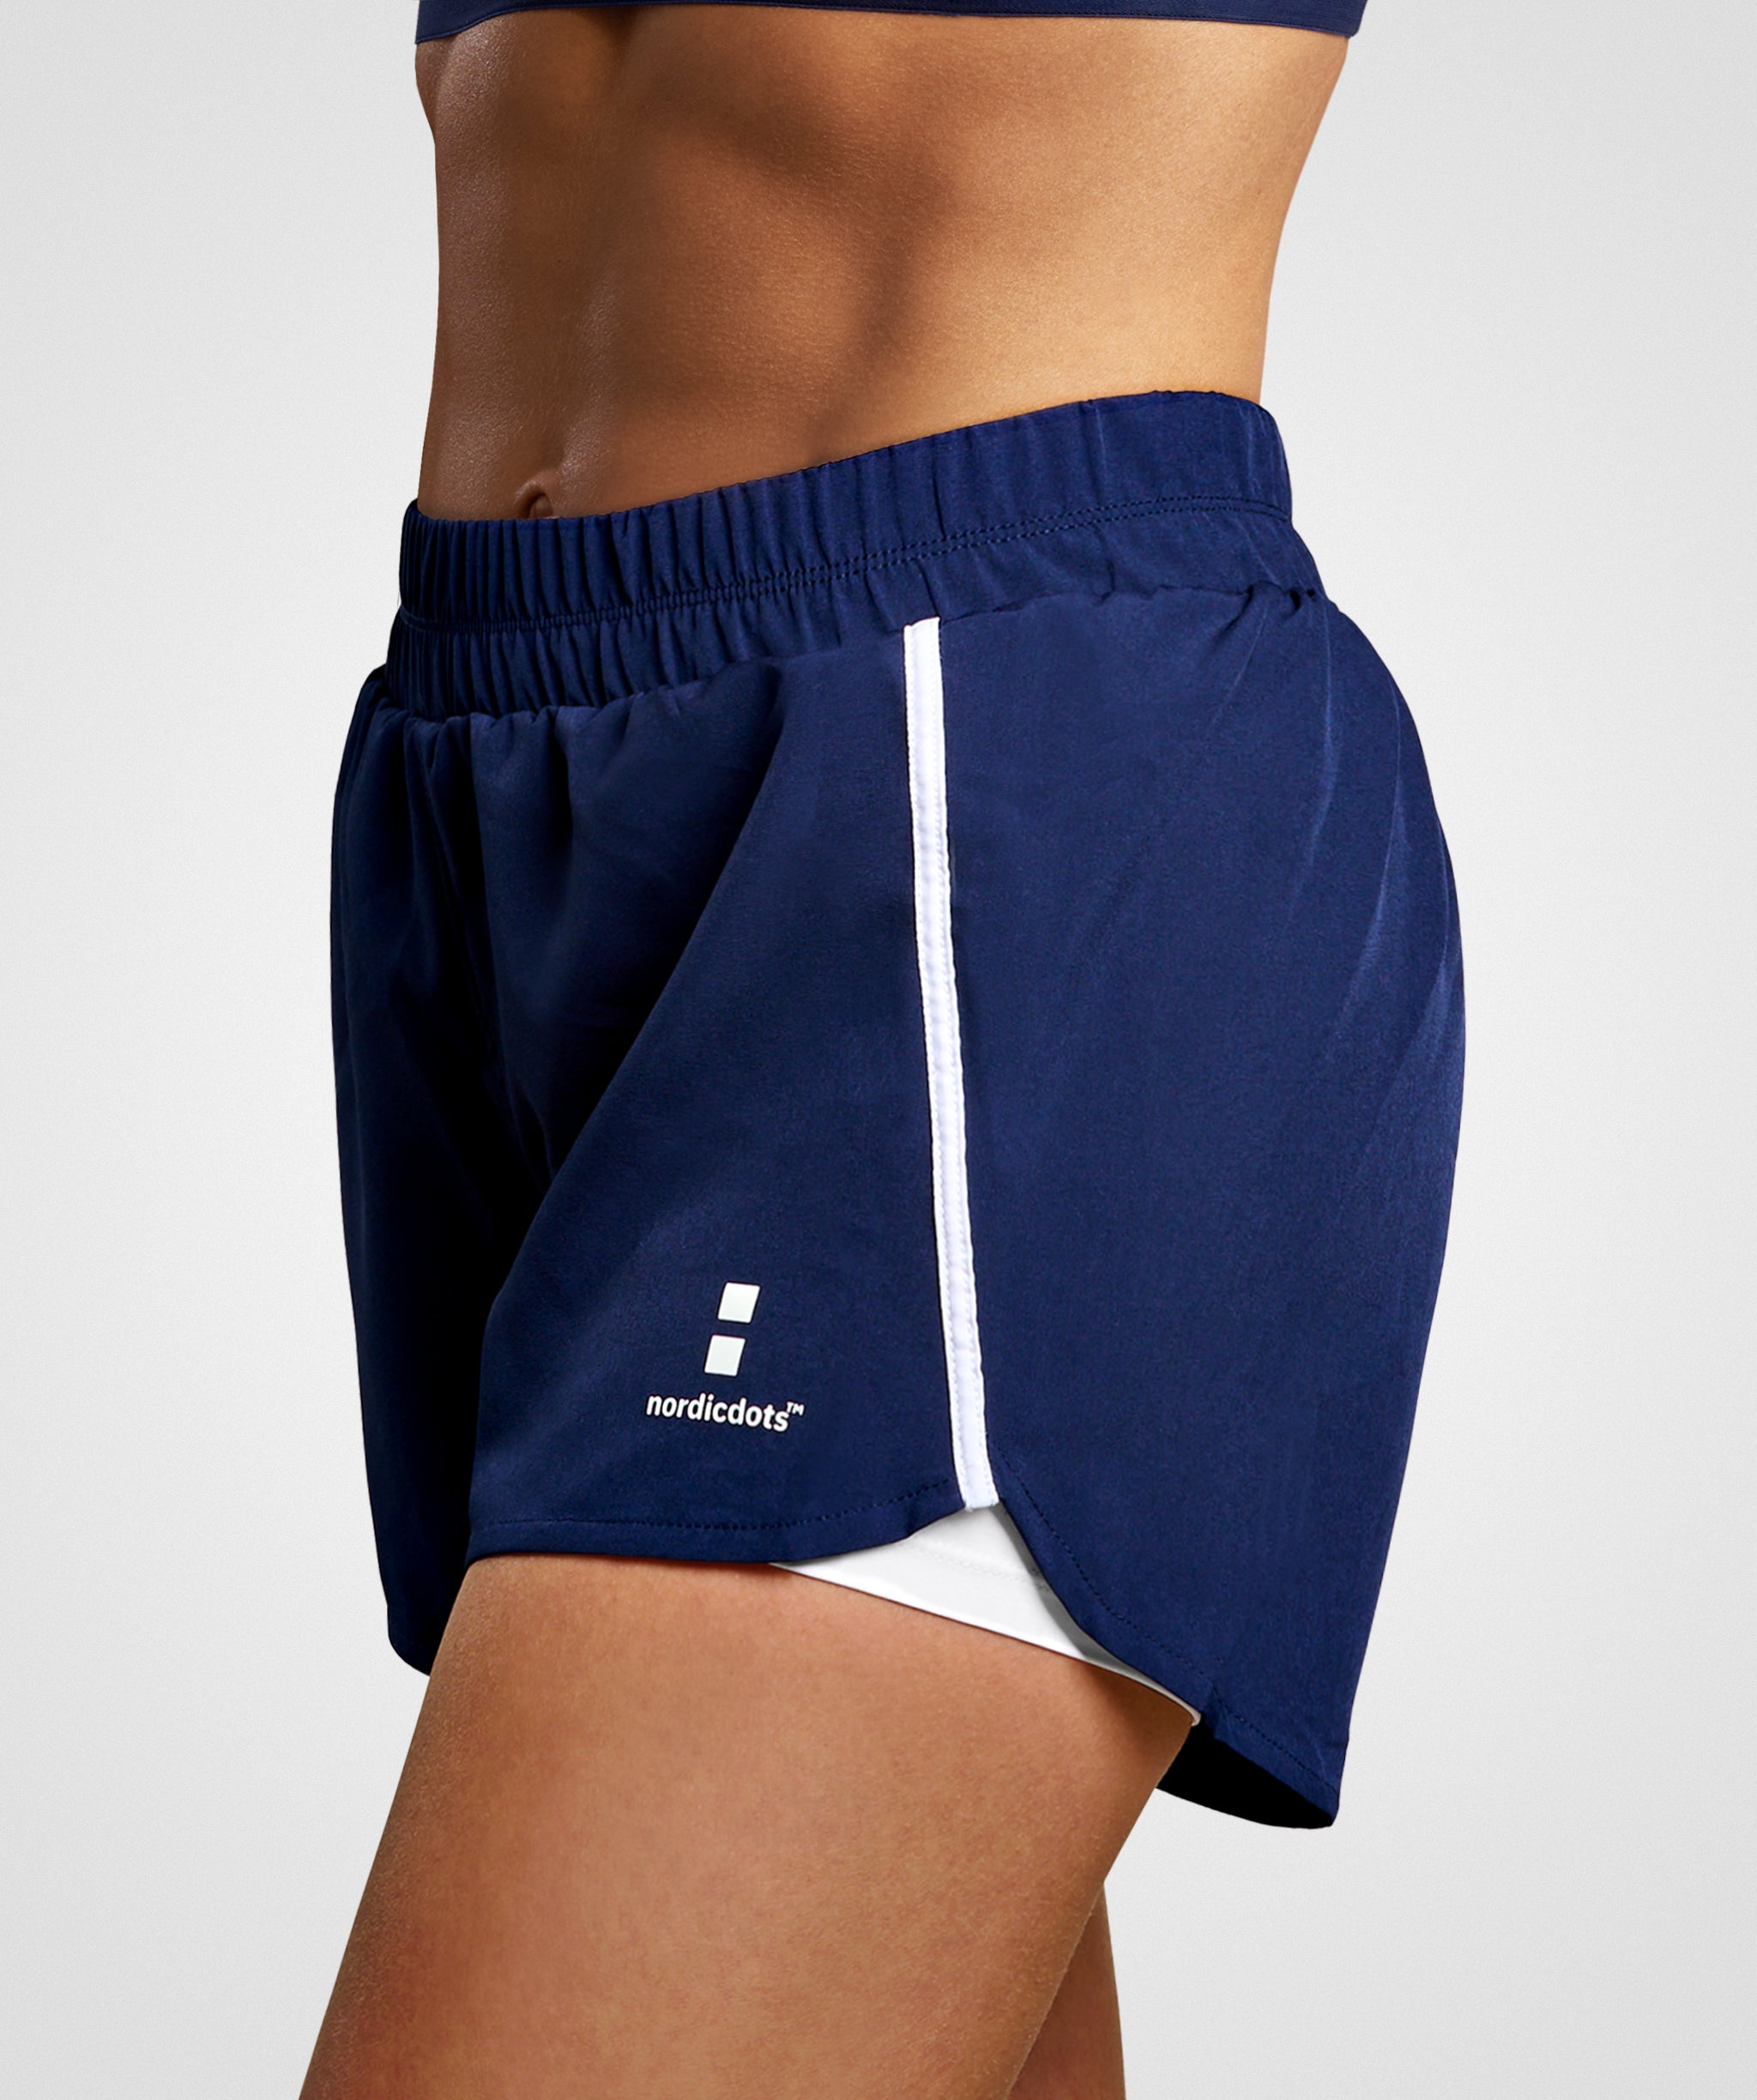 nordicdots women tennis padel shorts navy blue